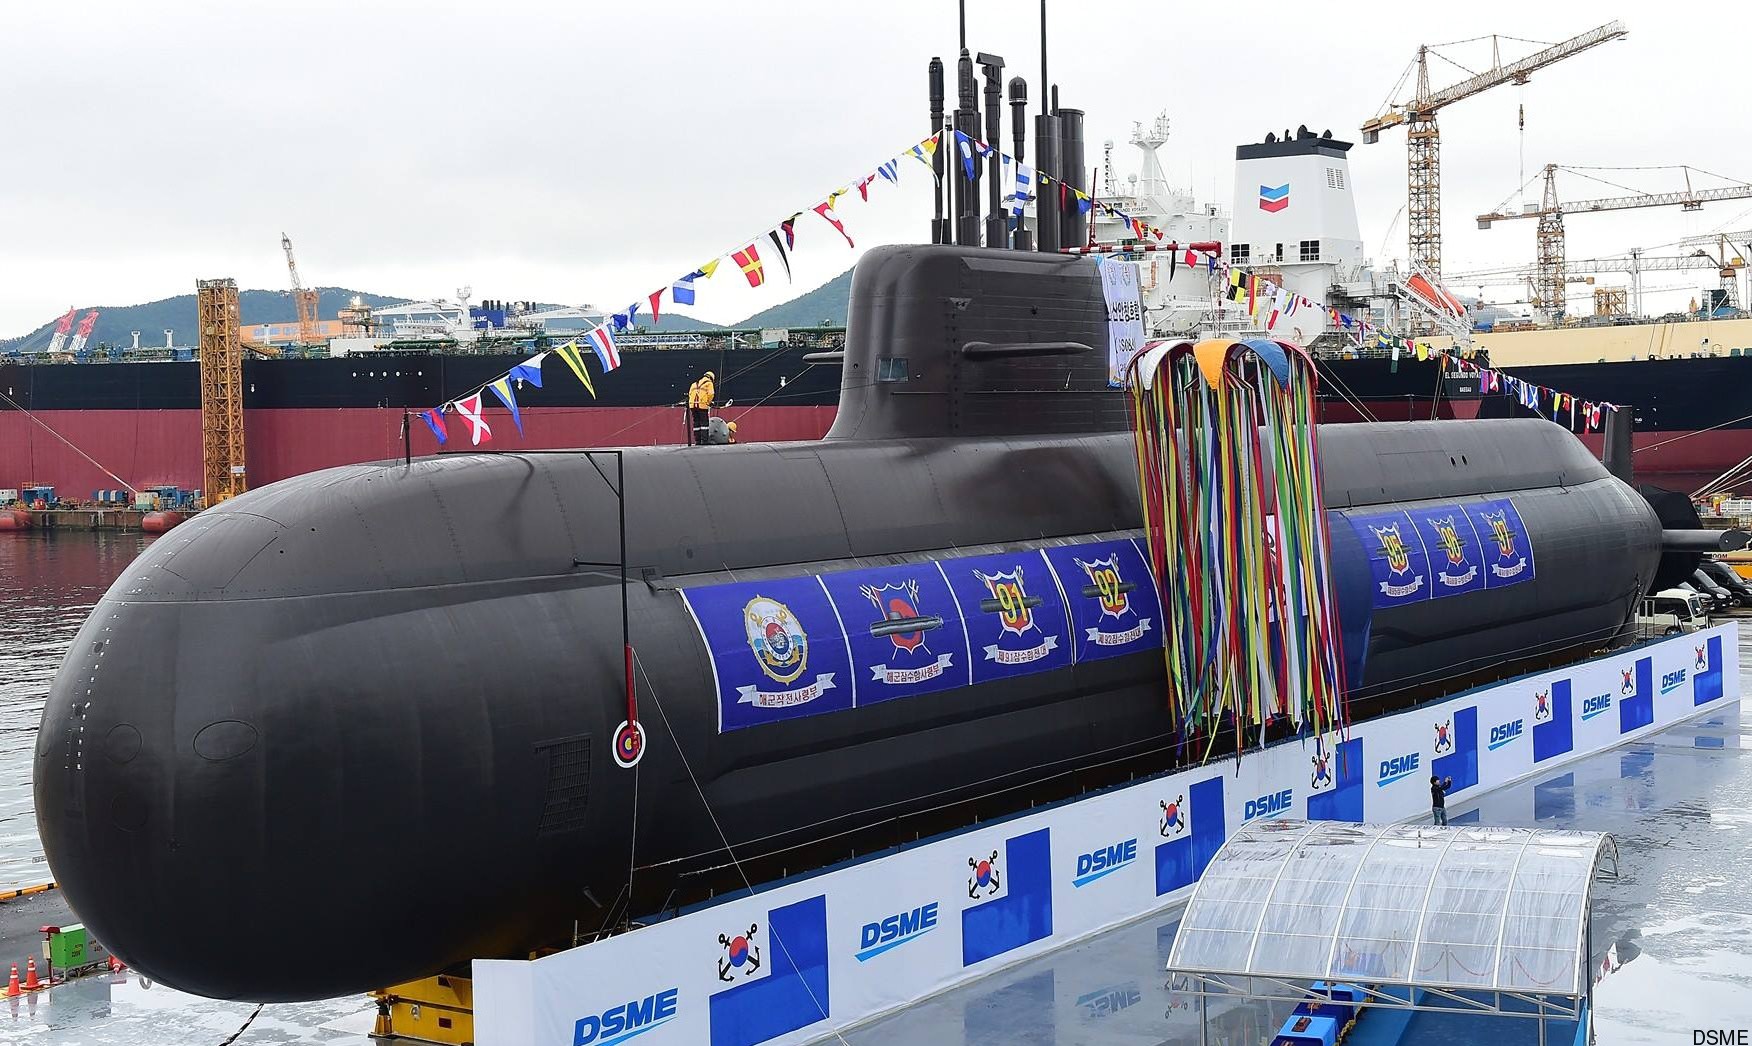 ss-083 roks dosan ahn changho class submarine kss-iii republic of korean navy rokn tiger shark torpedo ugm-84 harpoon ssm chonryong slcm missile hyonmoo cruise ballistic slbm 03